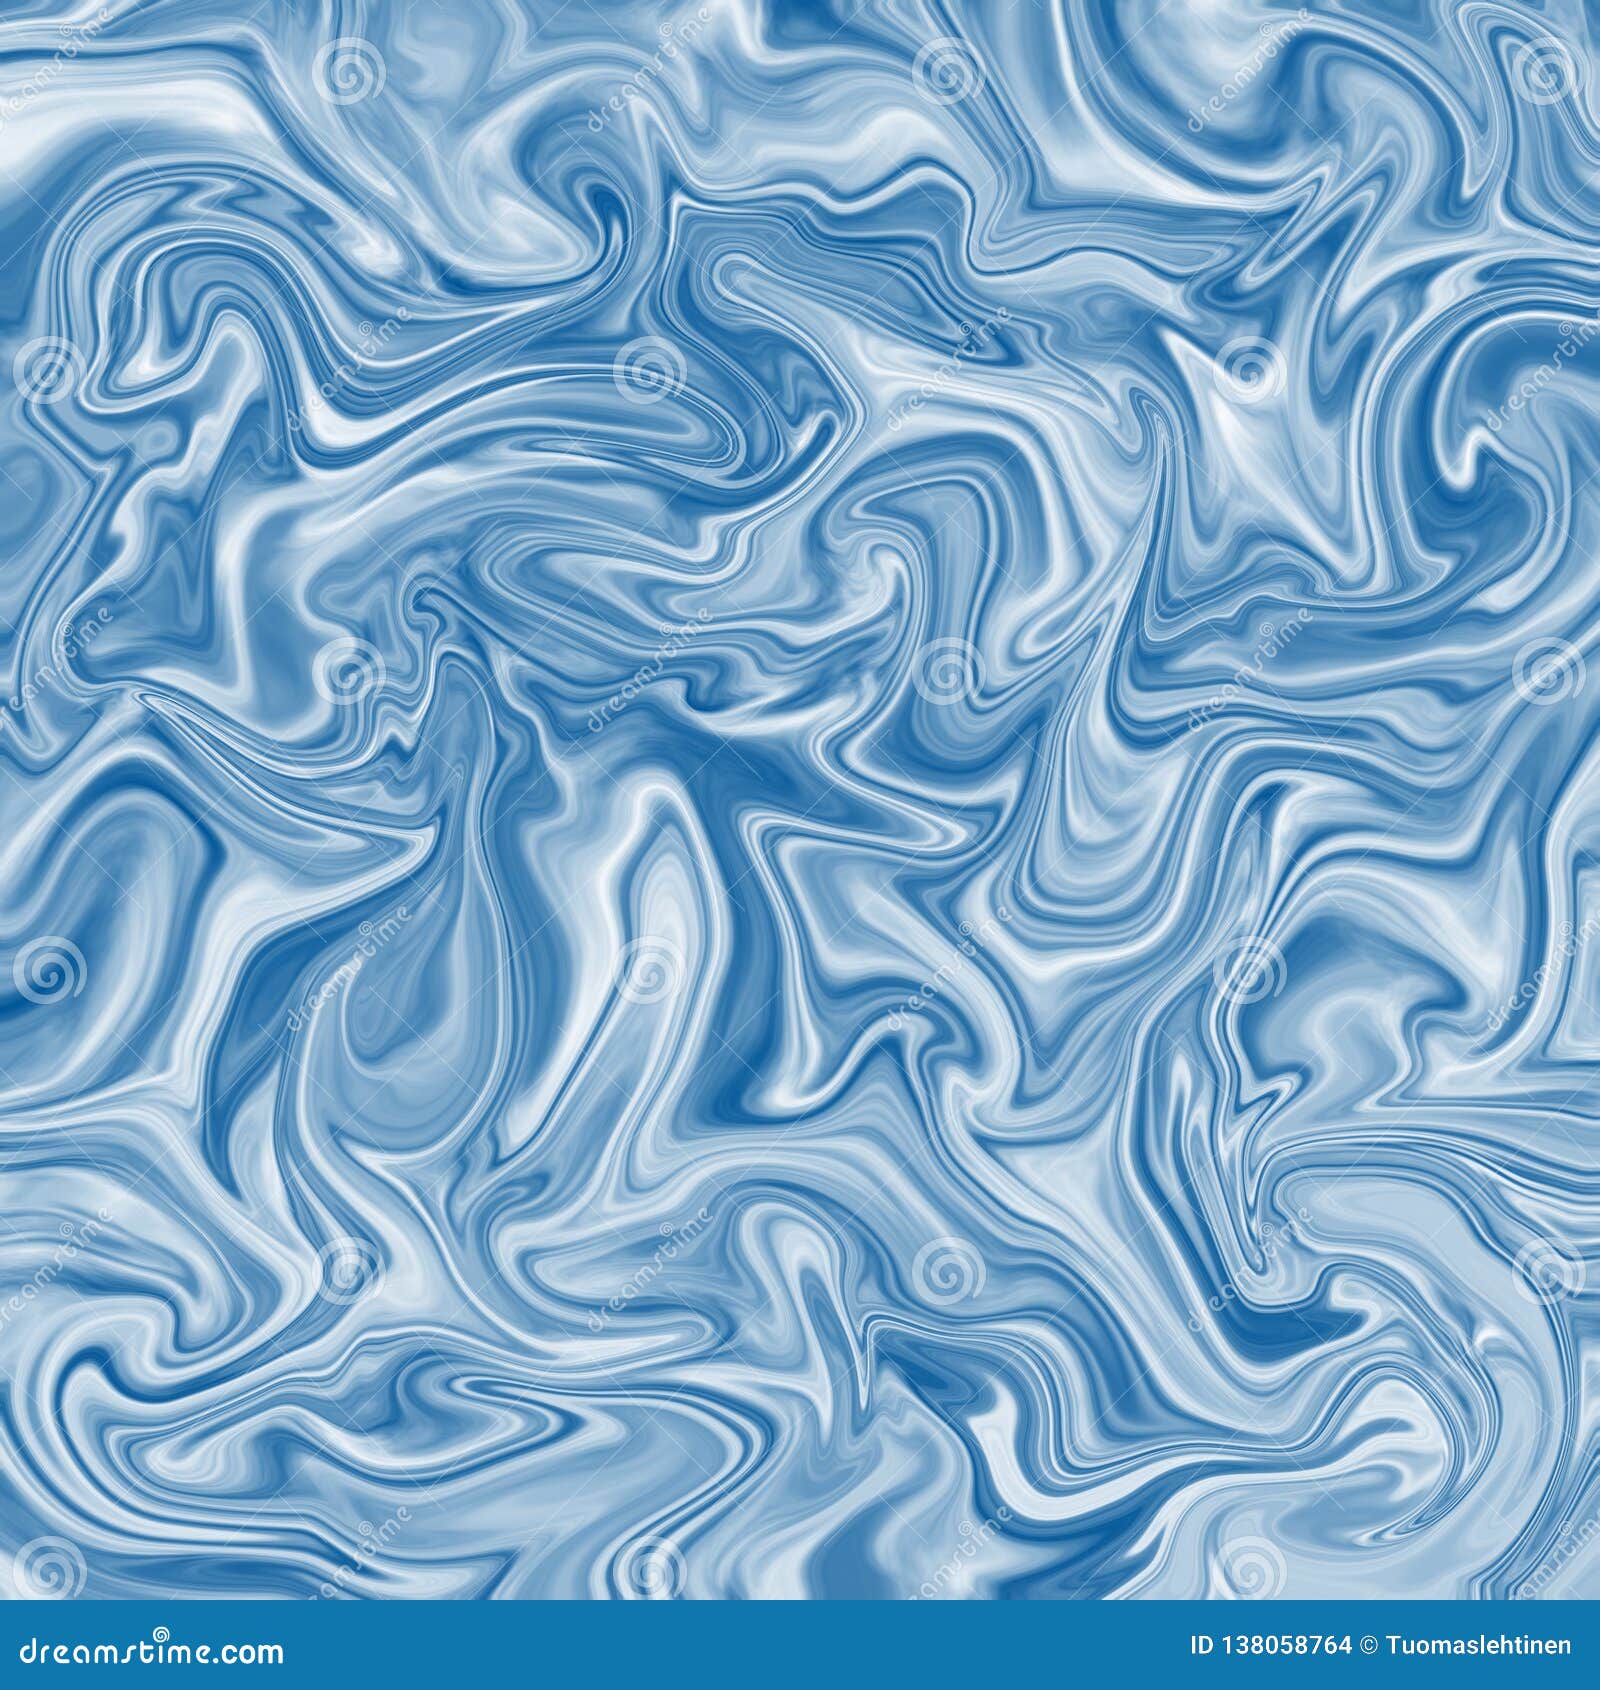 Abstract Light Blue Fluid Waves Background Stock Illustration ...